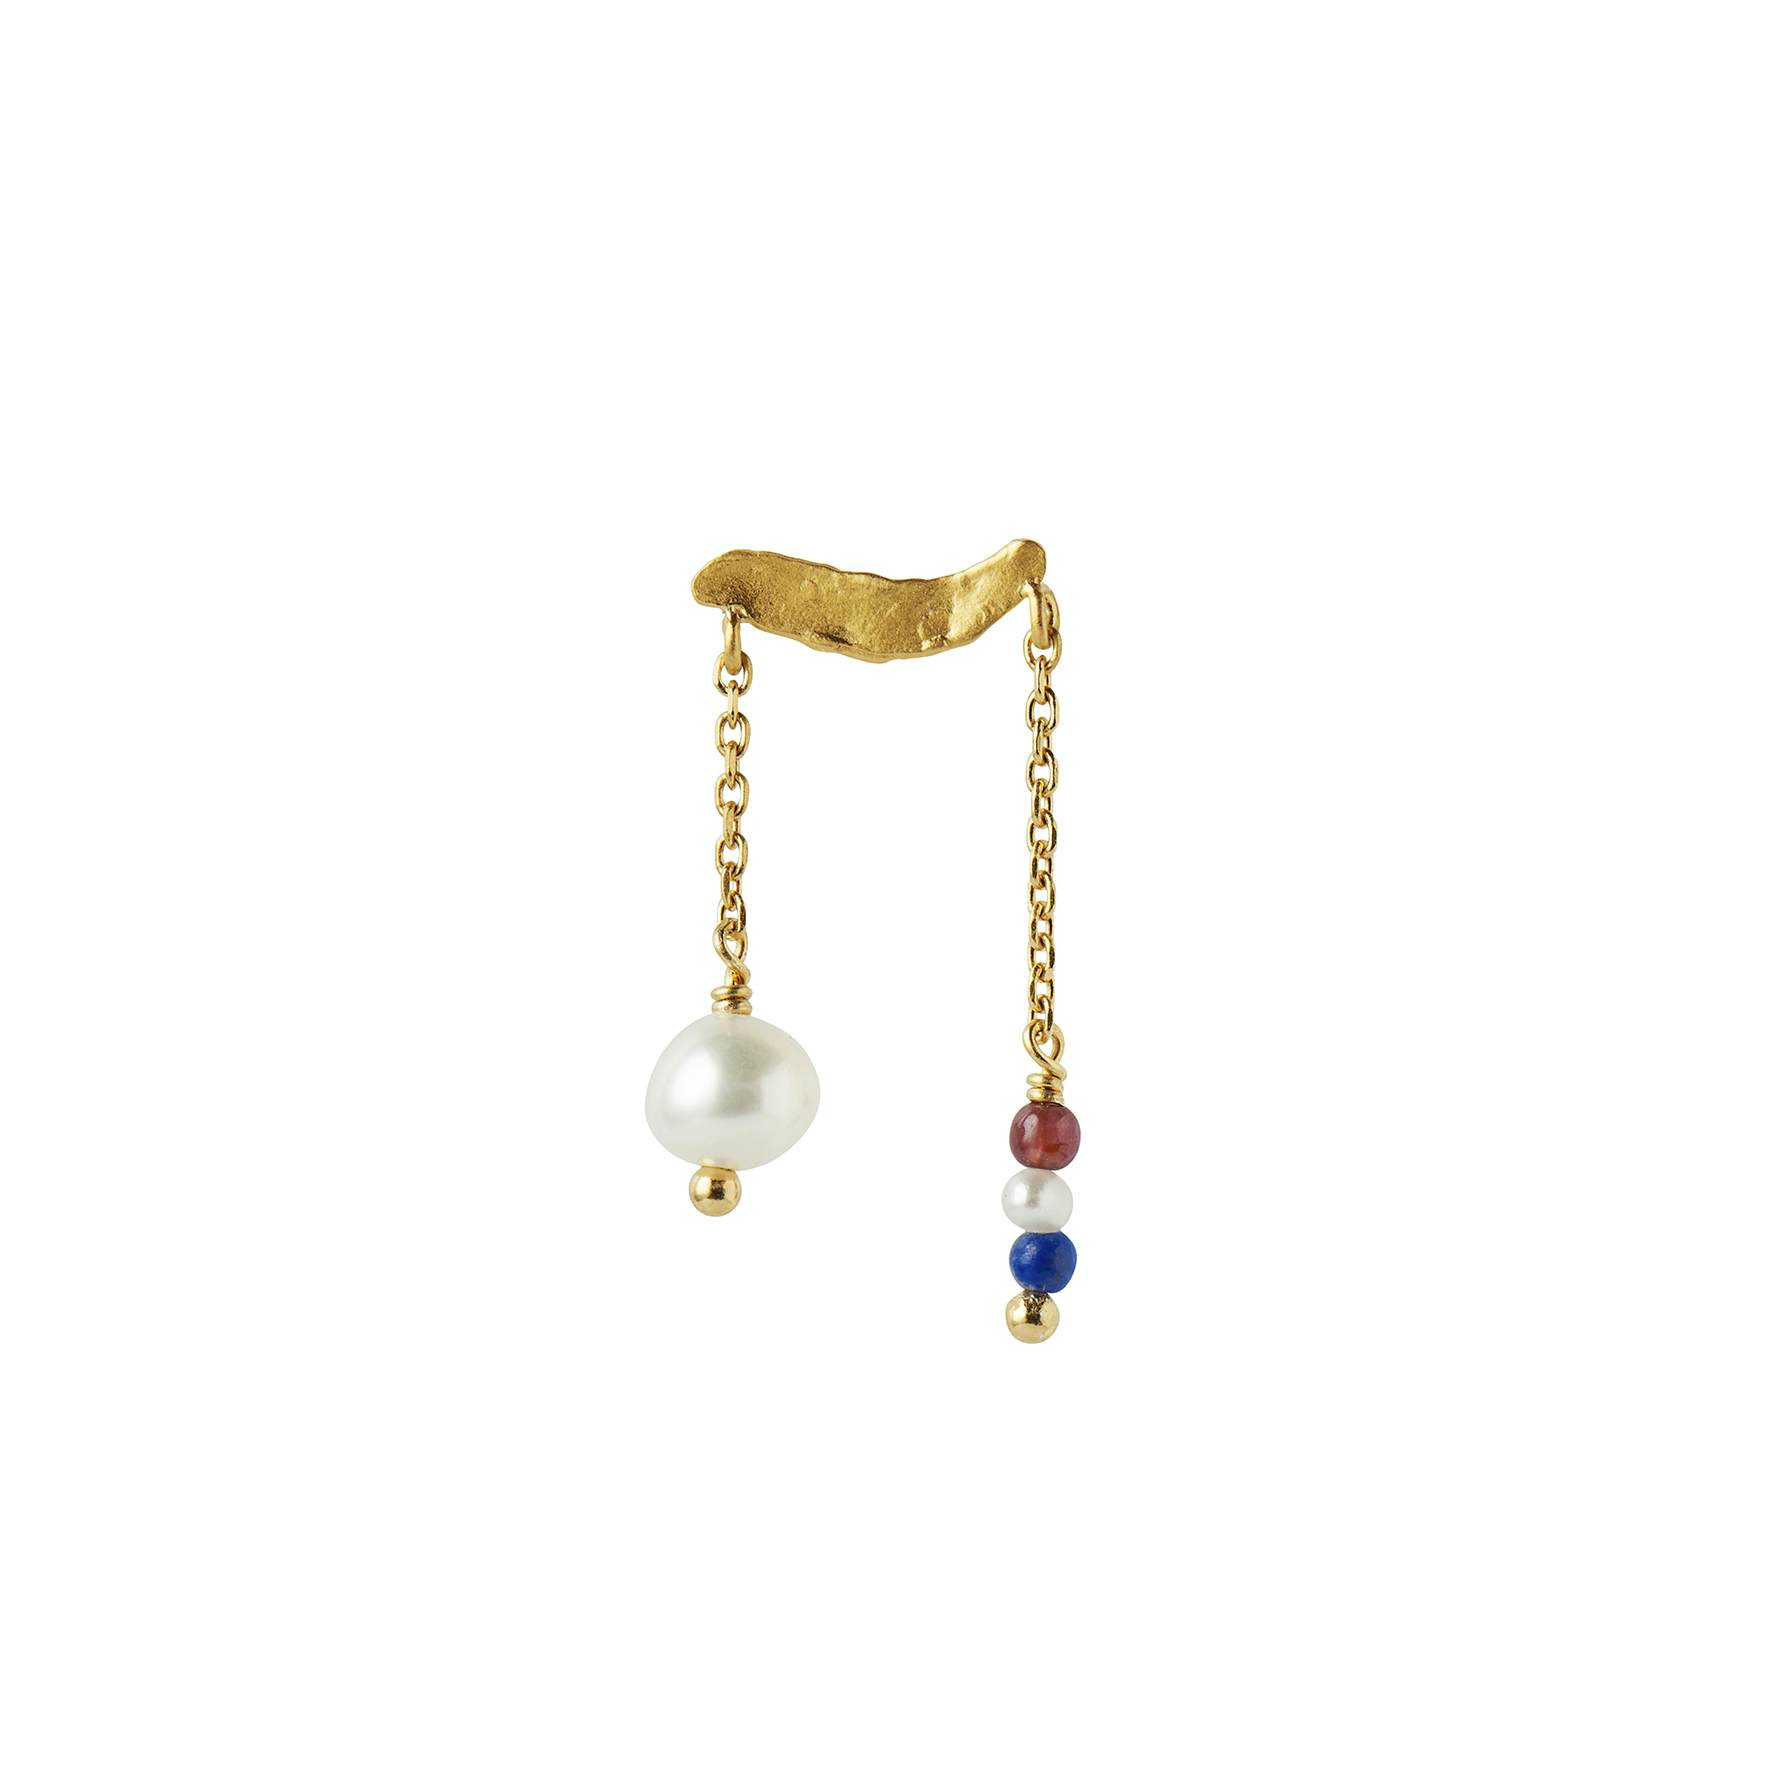 Petit Gold Splash Earring Chains & French Kiss fra STINE A Jewelry i Forgylt-Sølv Sterling 925